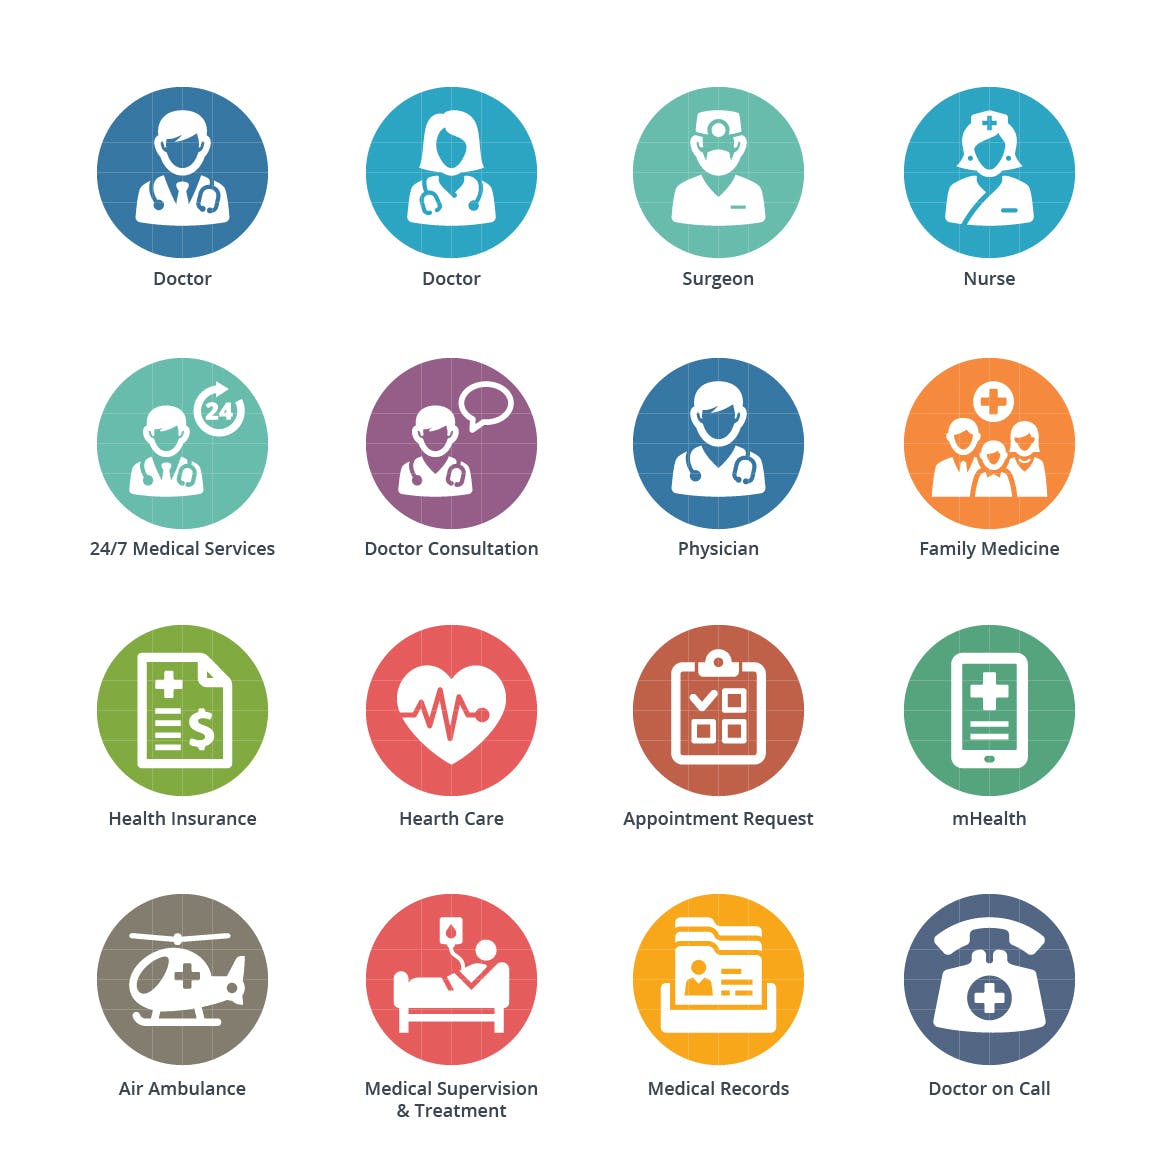 Sympa系列-医疗服务彩色素材库精选图标集v1 Colored Medical Services Icons Set 1- Sympa Series插图(2)